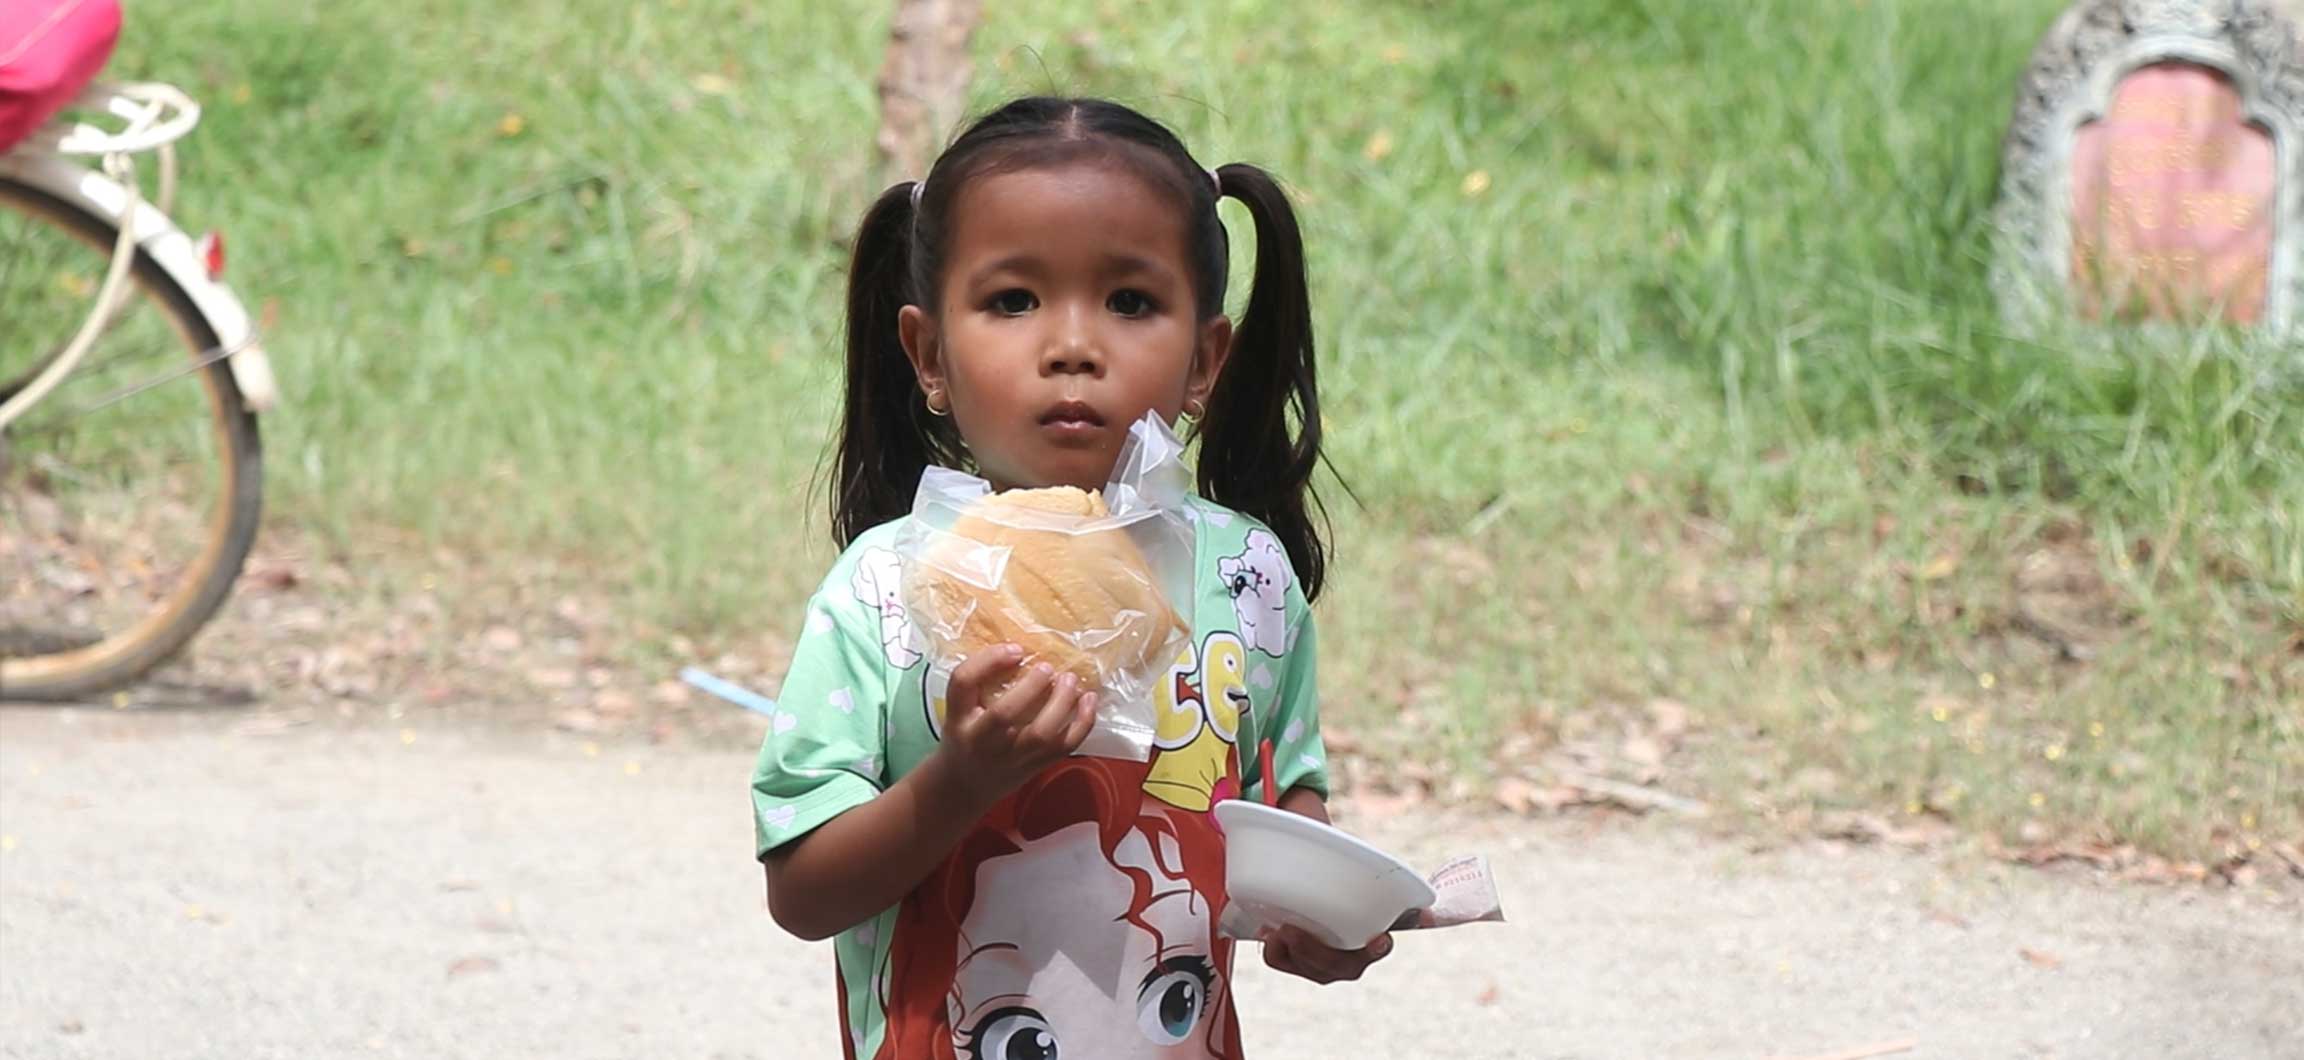 Child holding food.